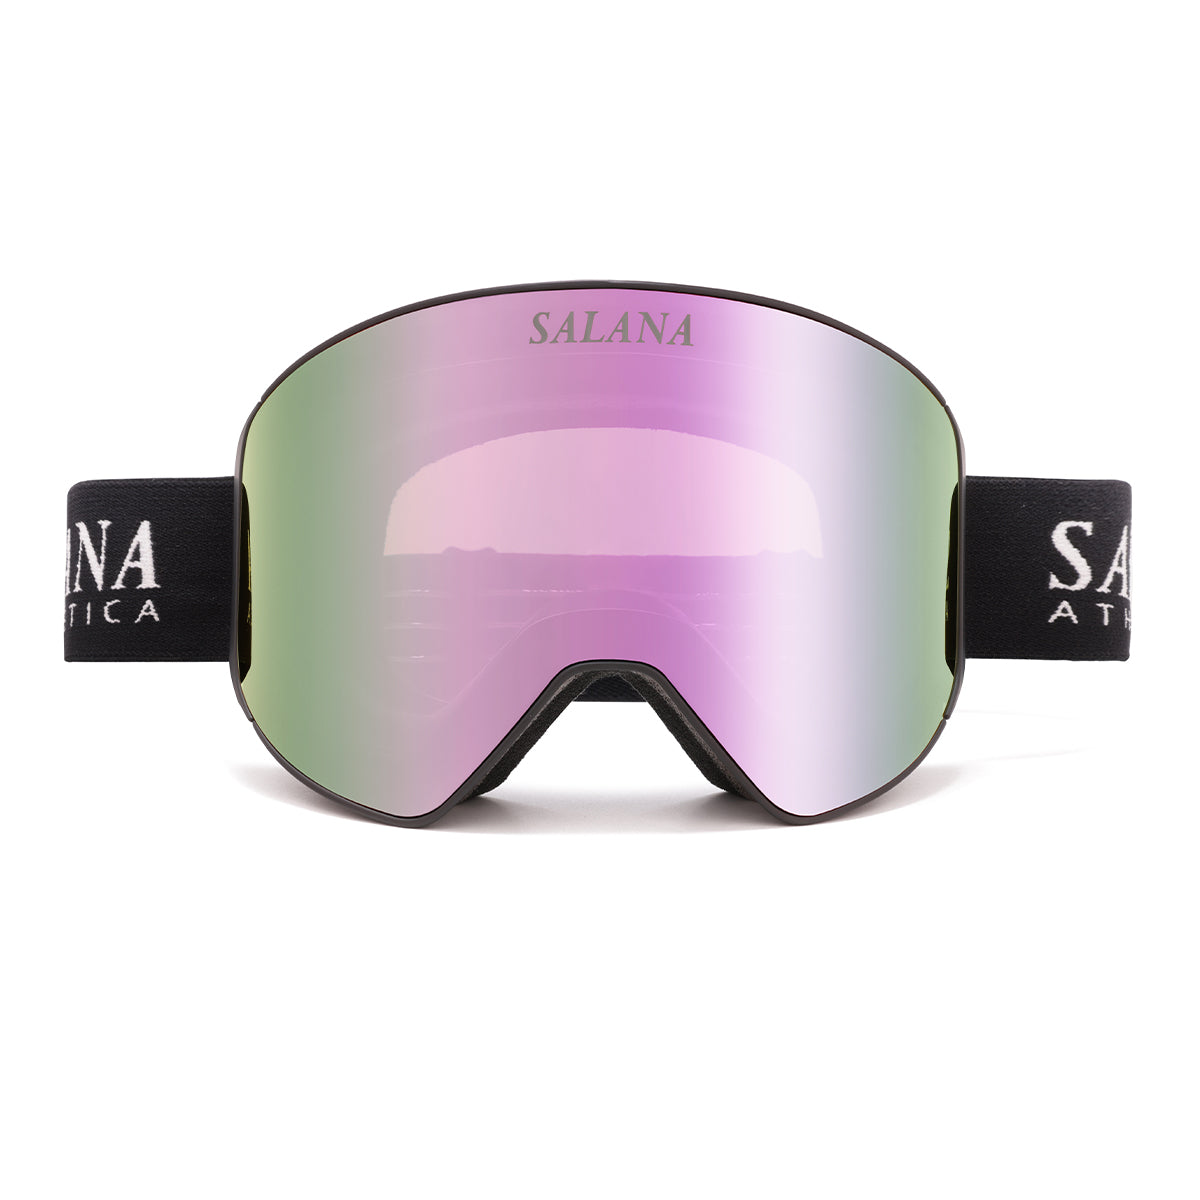 Salana pink mirrored ski snowboard goggles